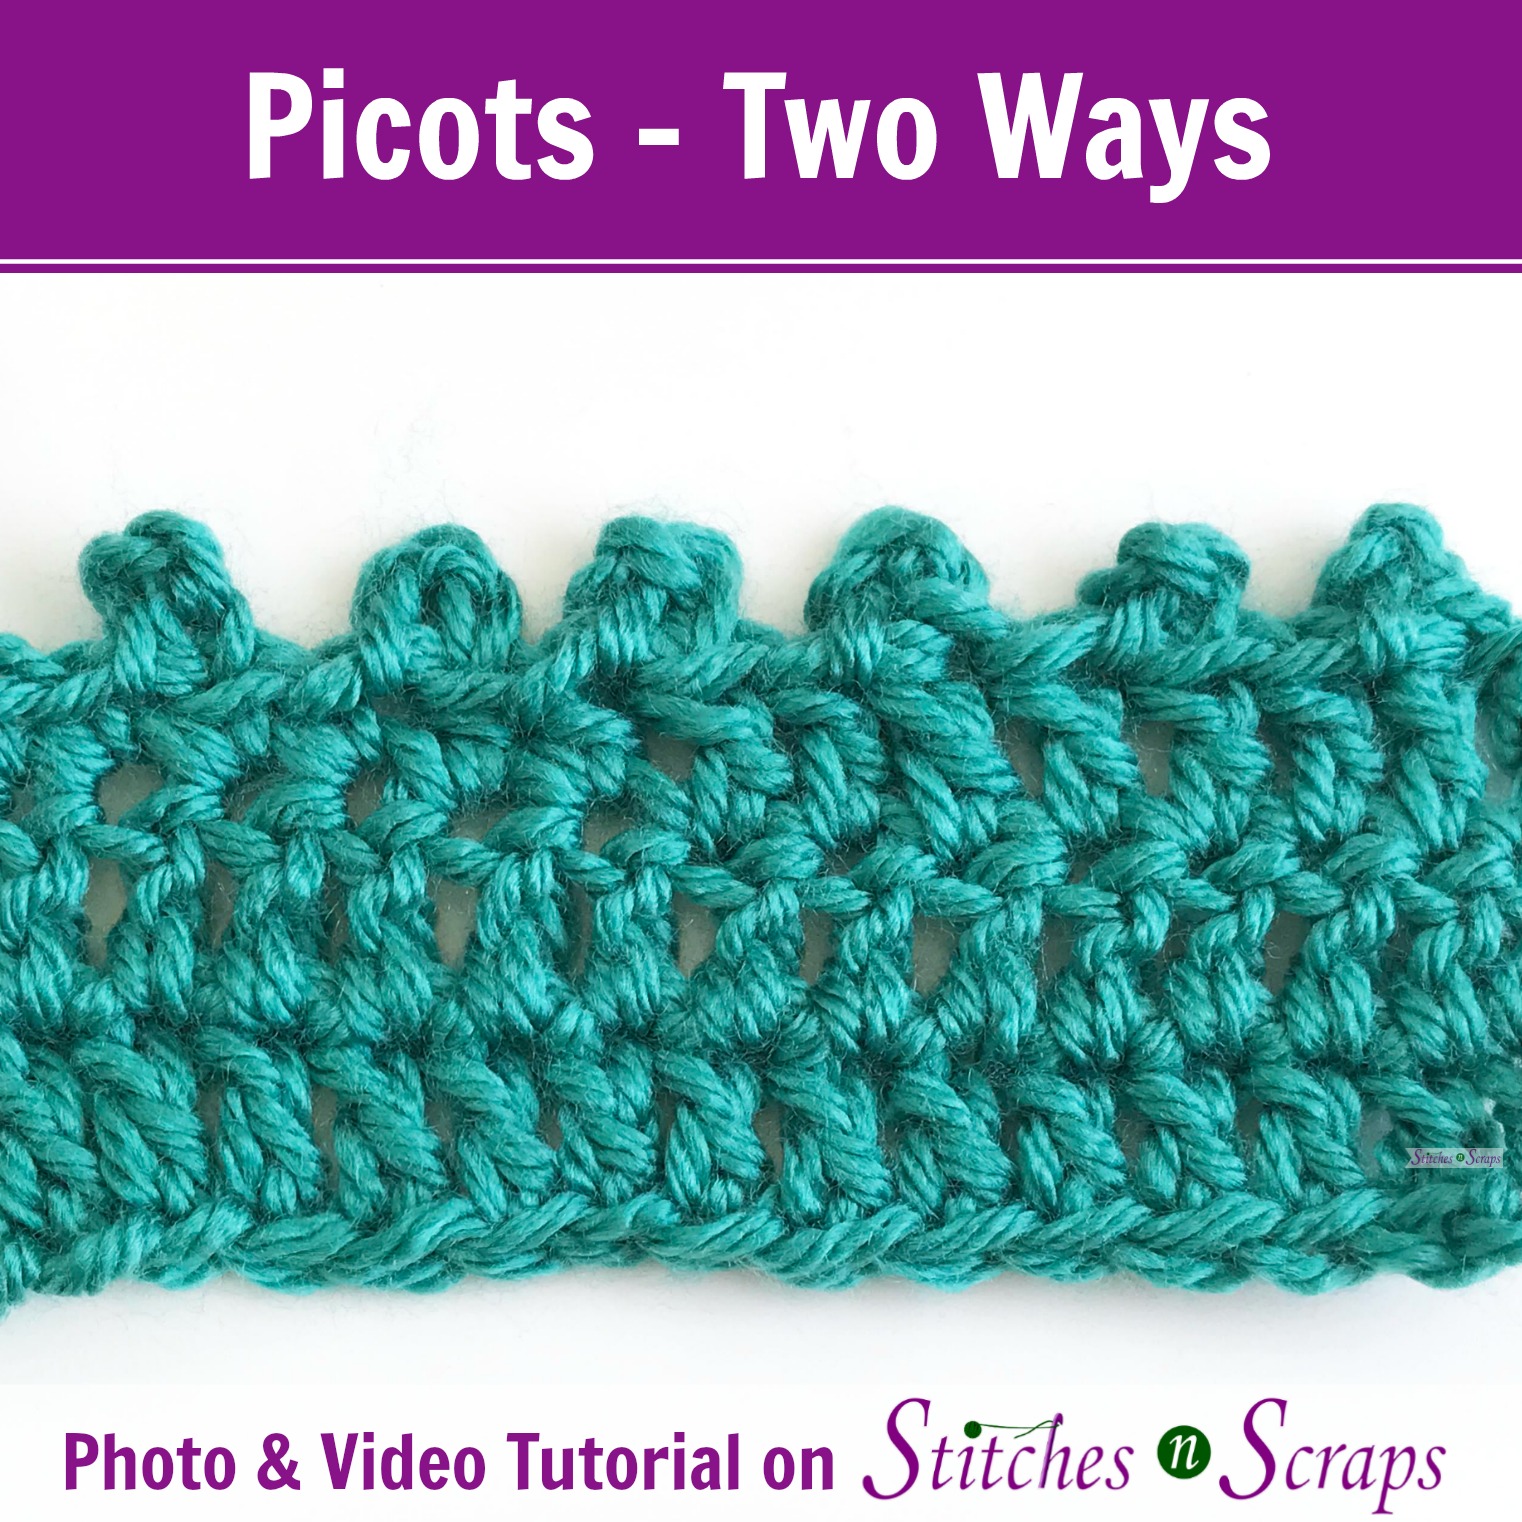 Picots 2 ways - Tutorial on StitchesnScraps.com